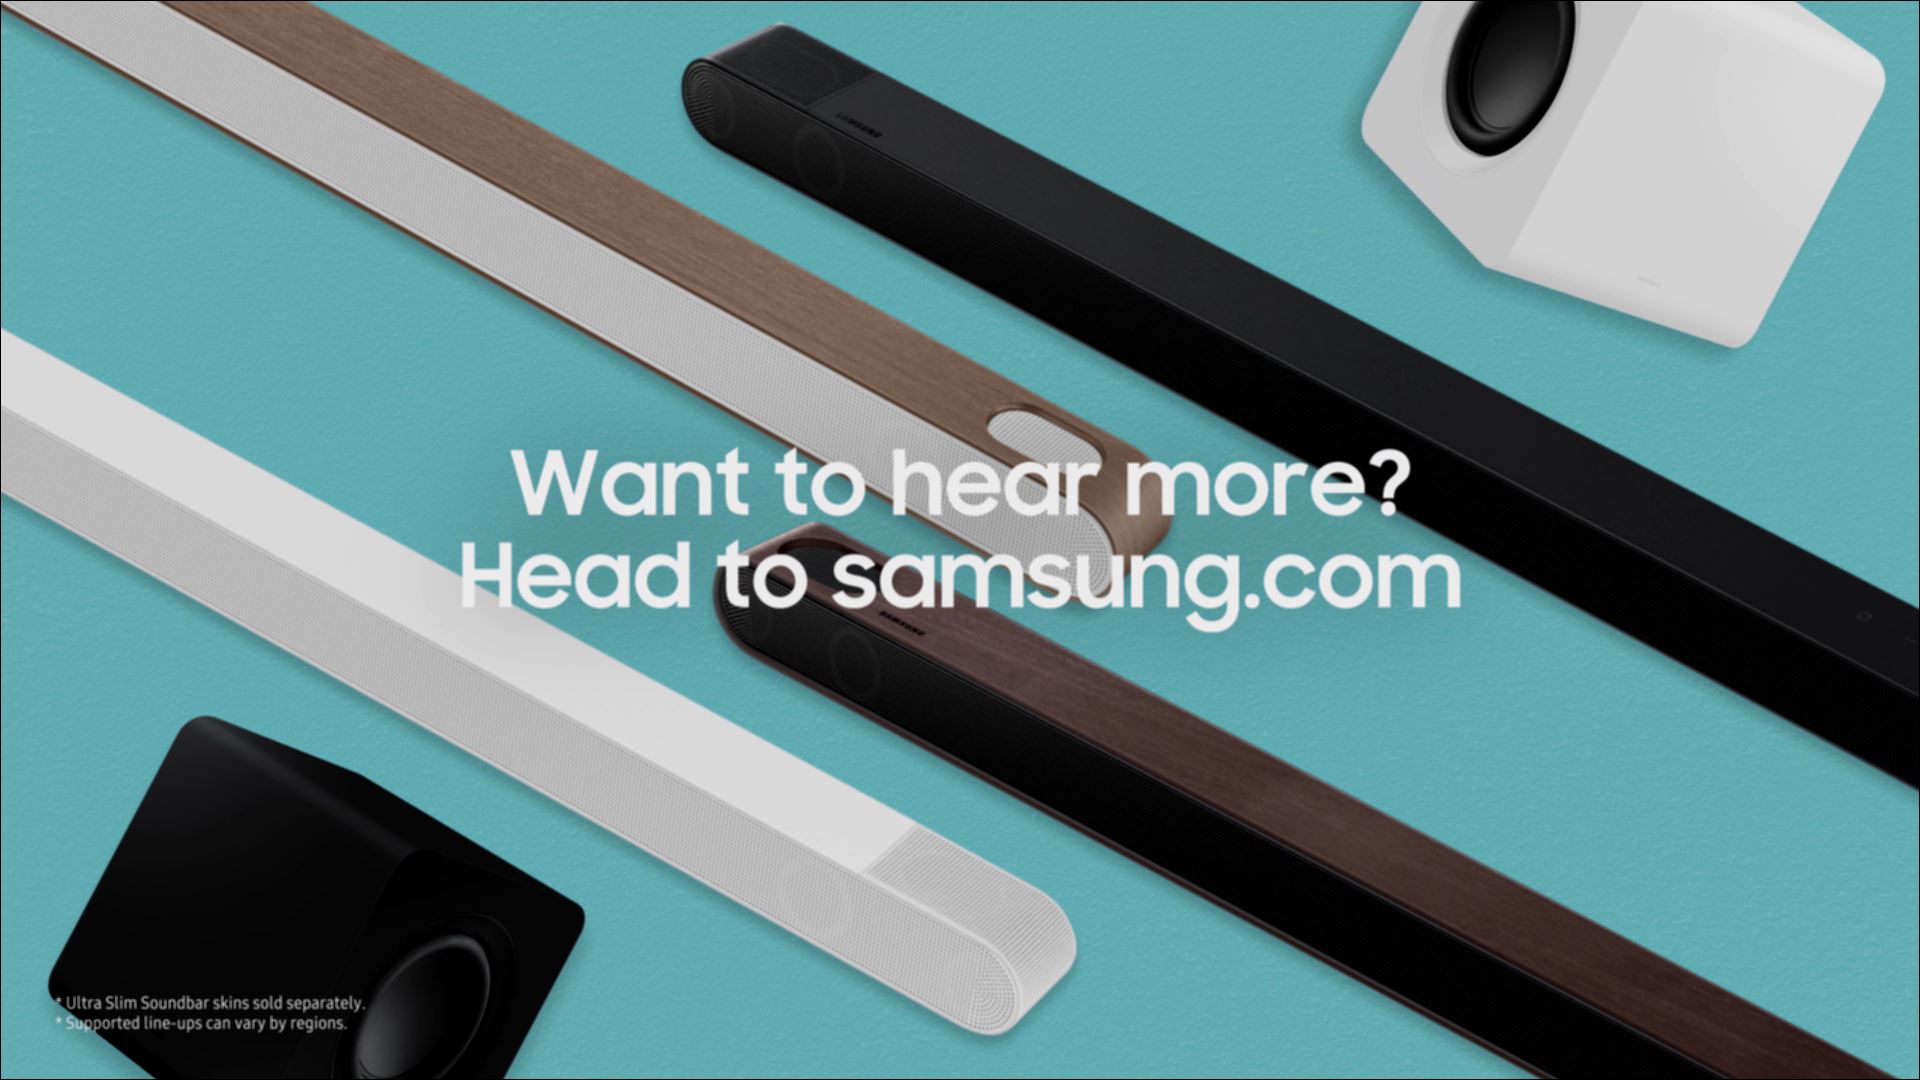 Samsung Ultra Slim Soundbat